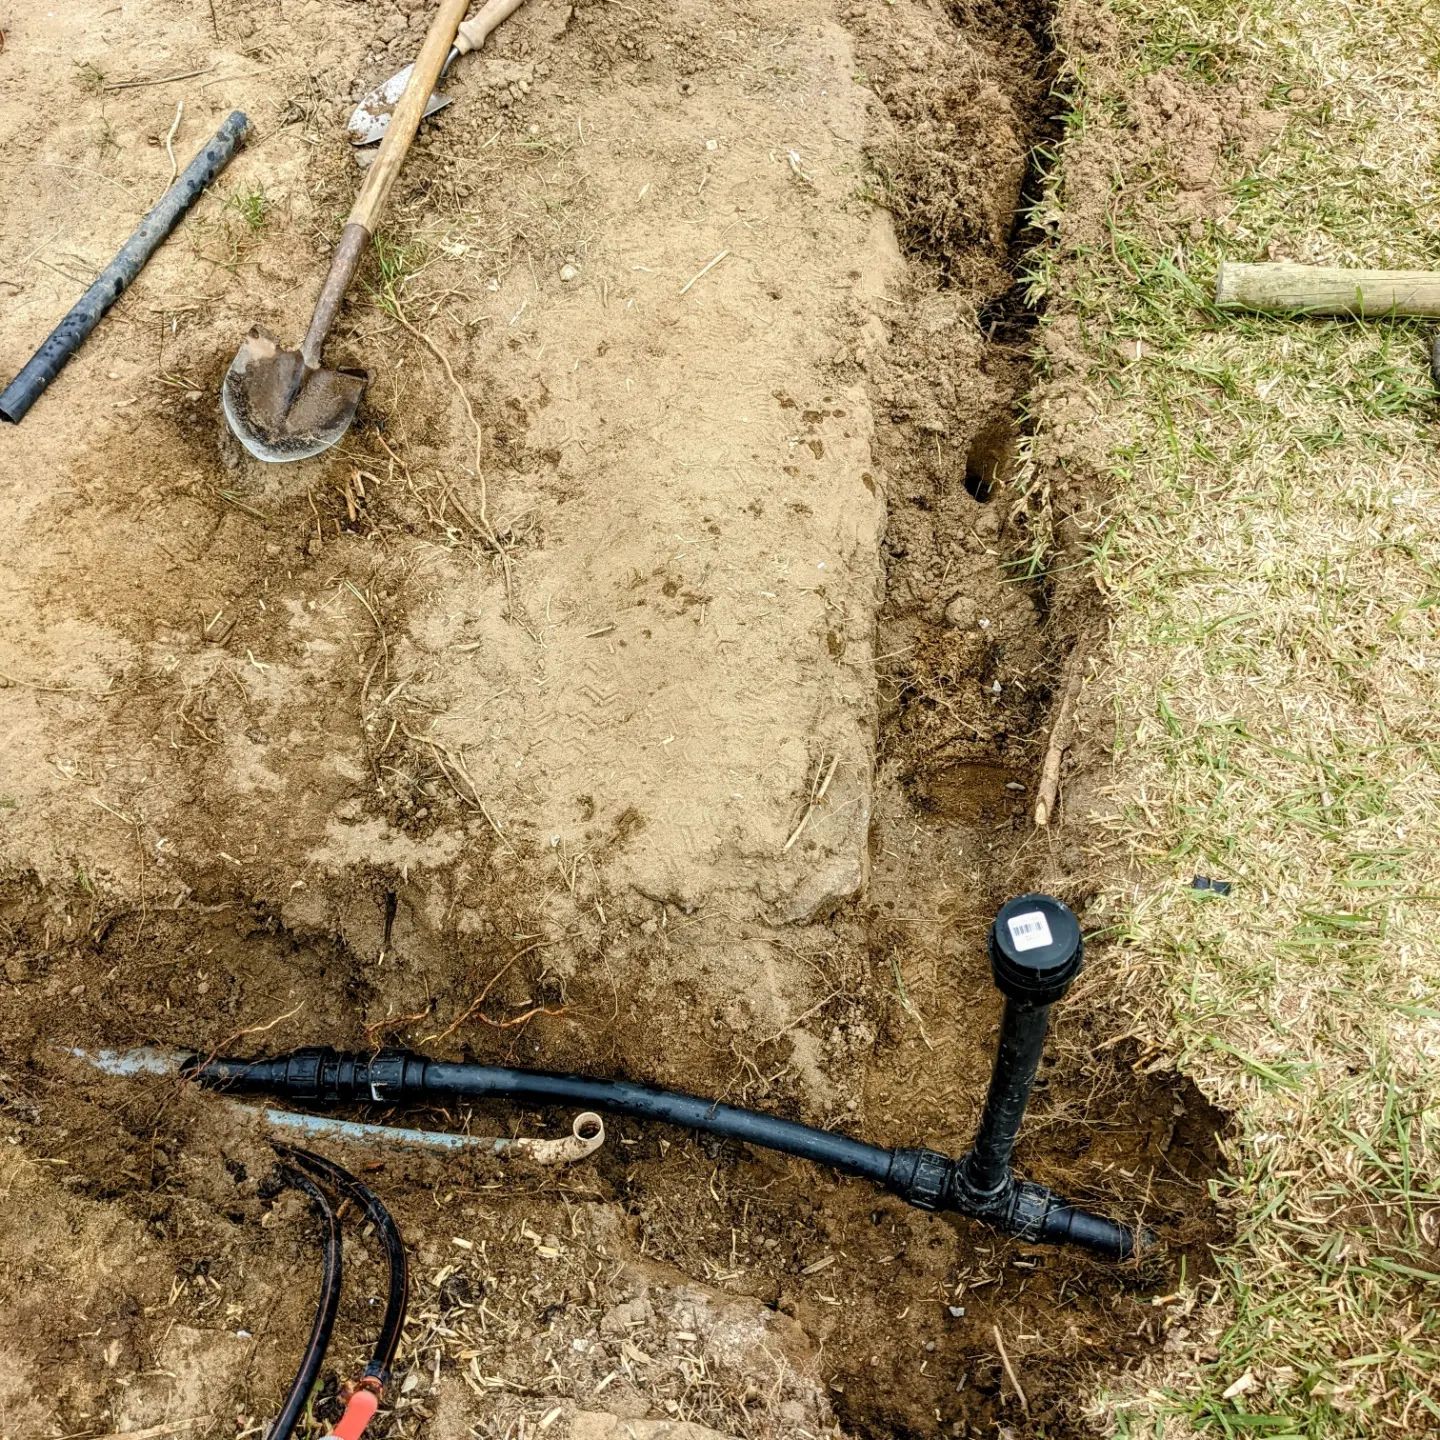 Punctured water pipe repair successful